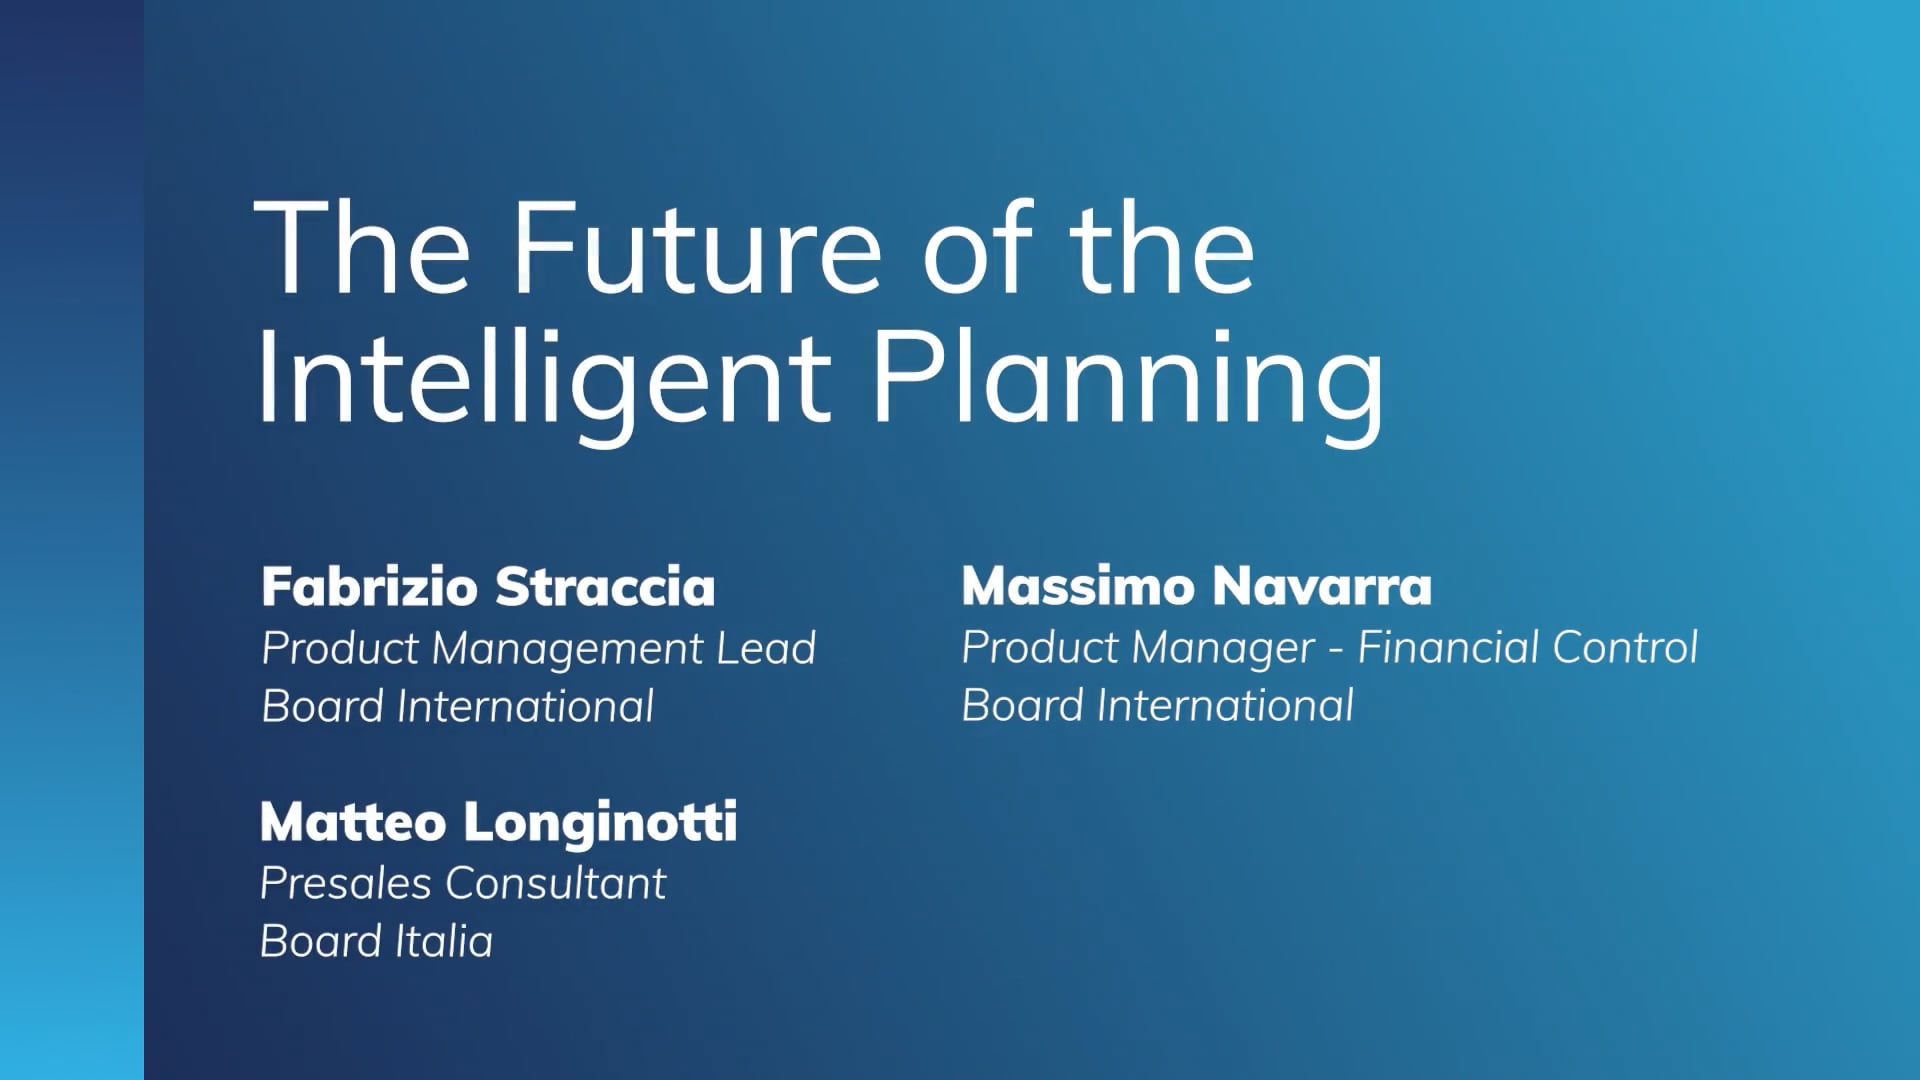 Keynote: The Future of the Intelligent Planning Platform